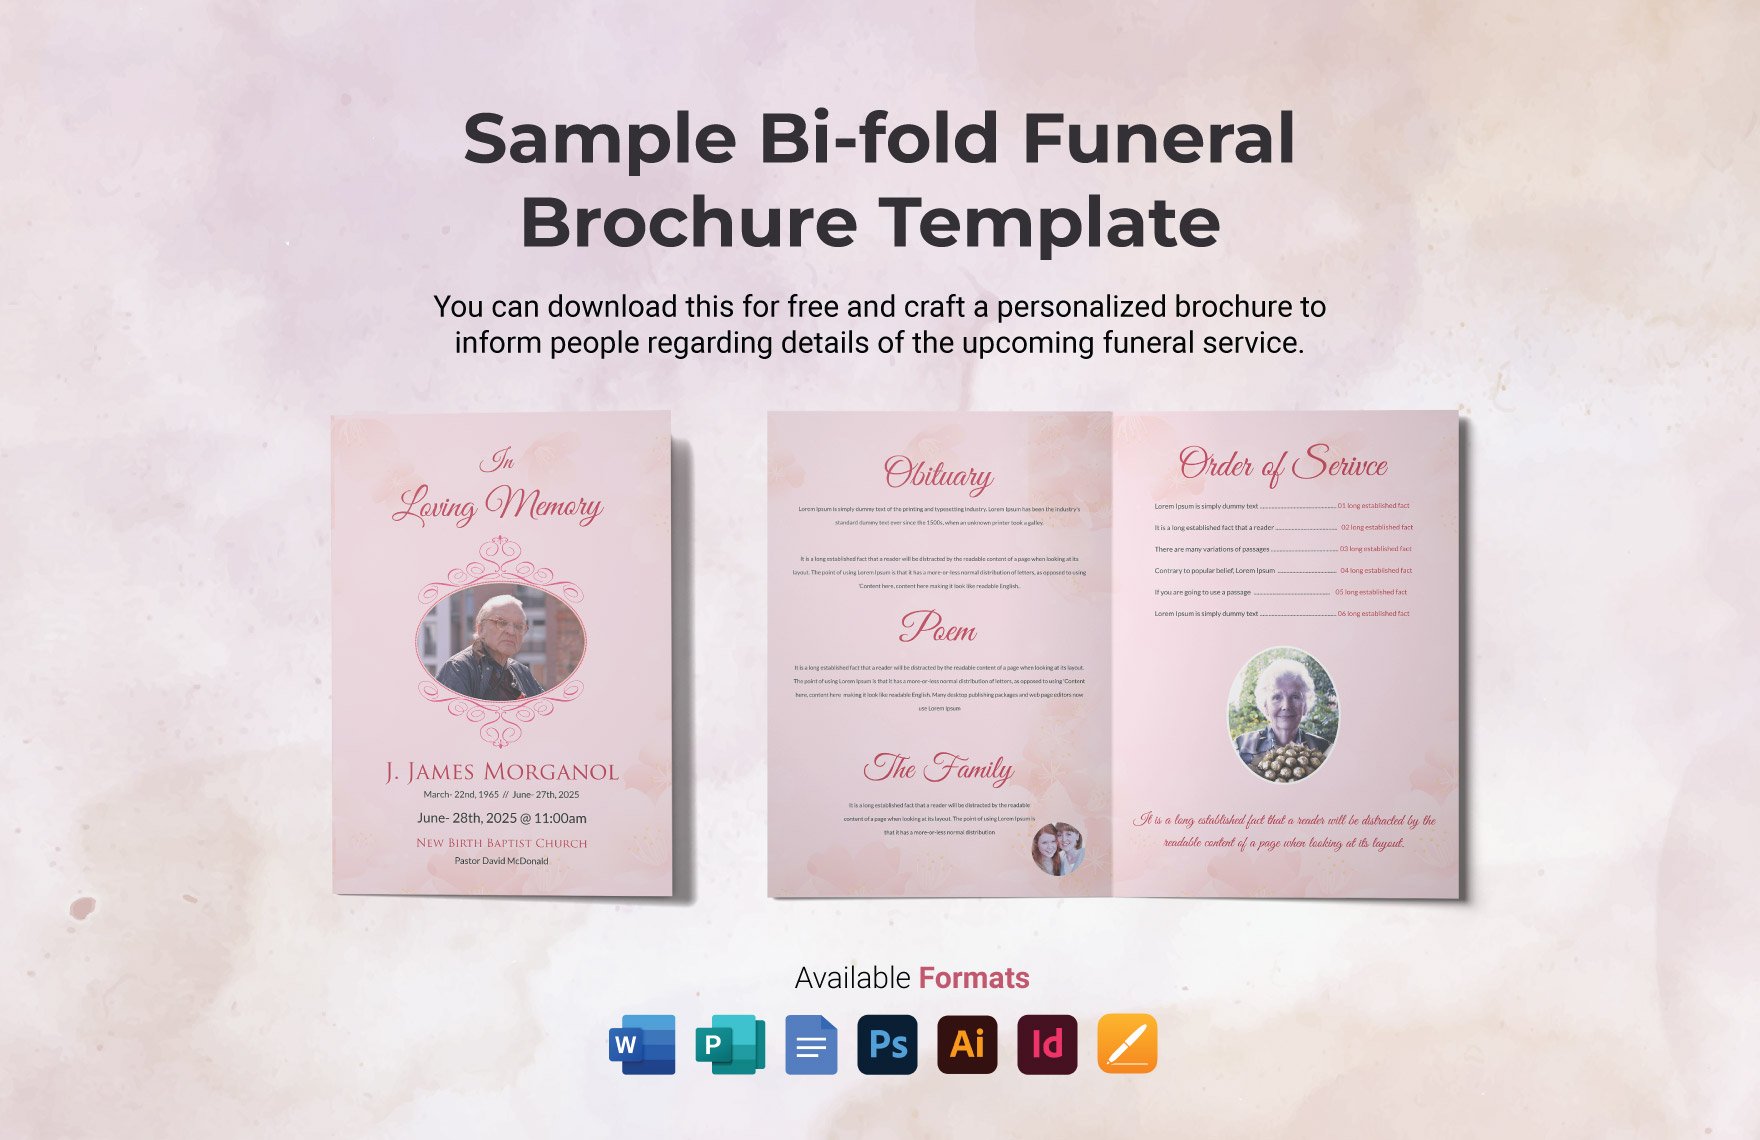 Sample Bi-fold Funeral Brochure Template